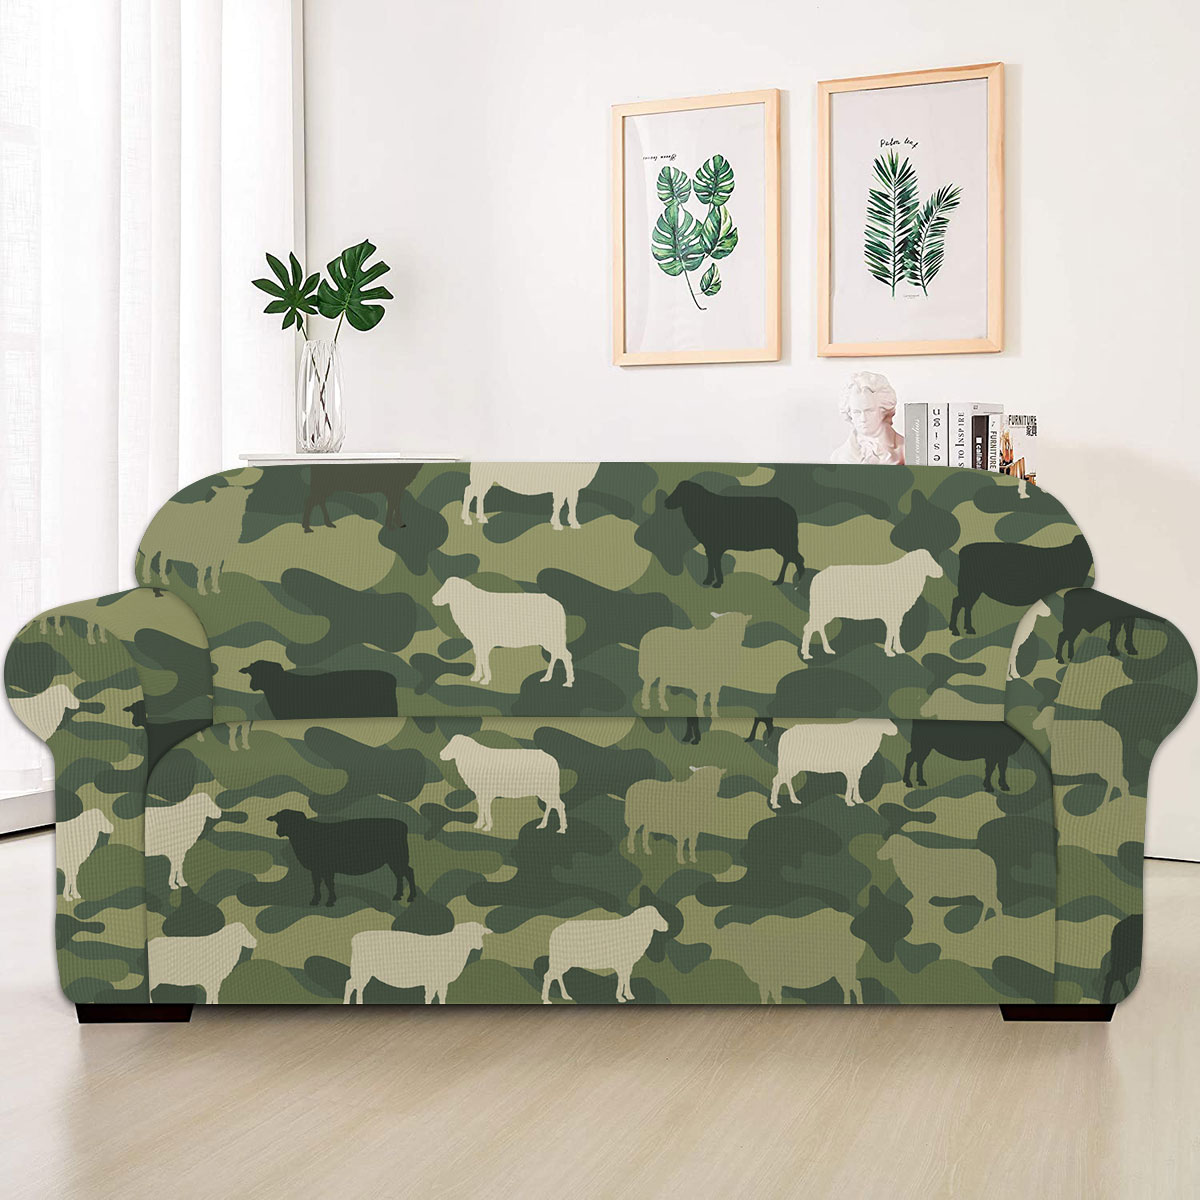 Sheep Camo Pattern Sofa Cover